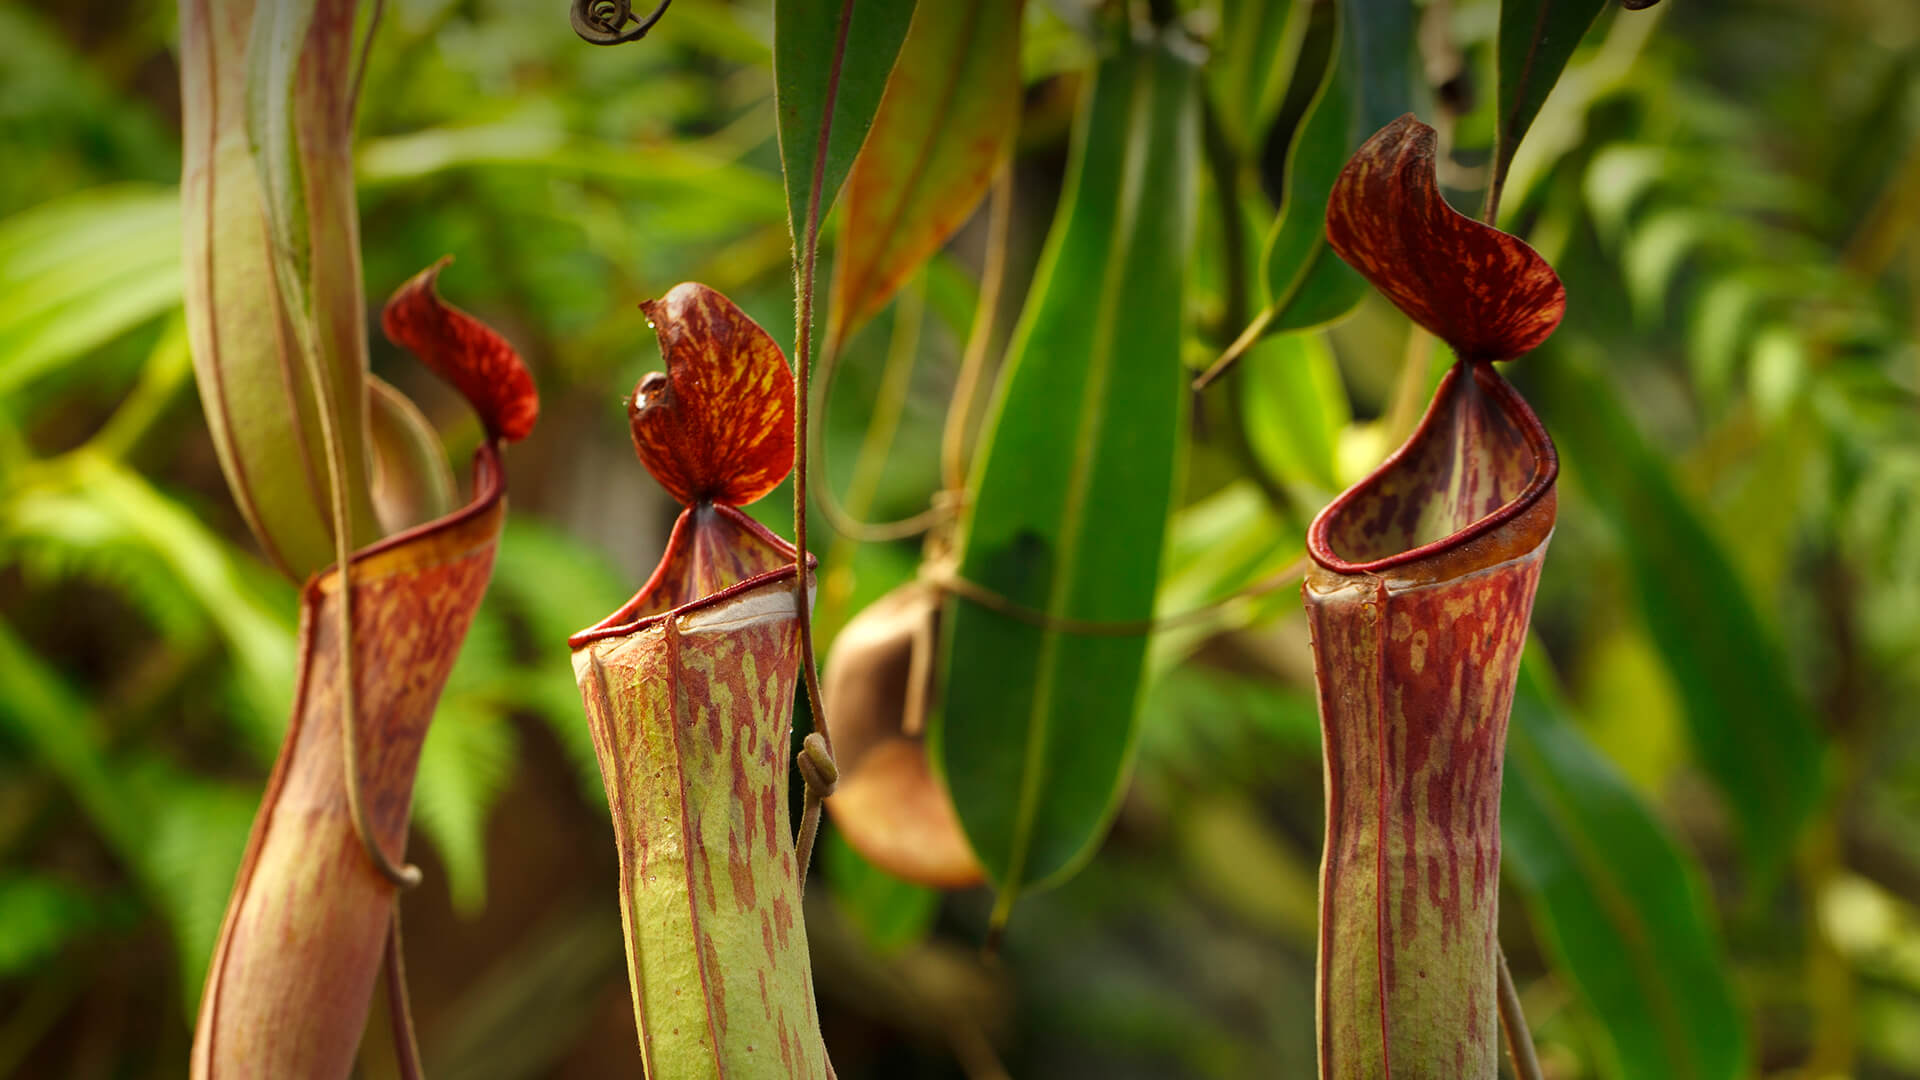 Three tropical pitcher plant "traps"